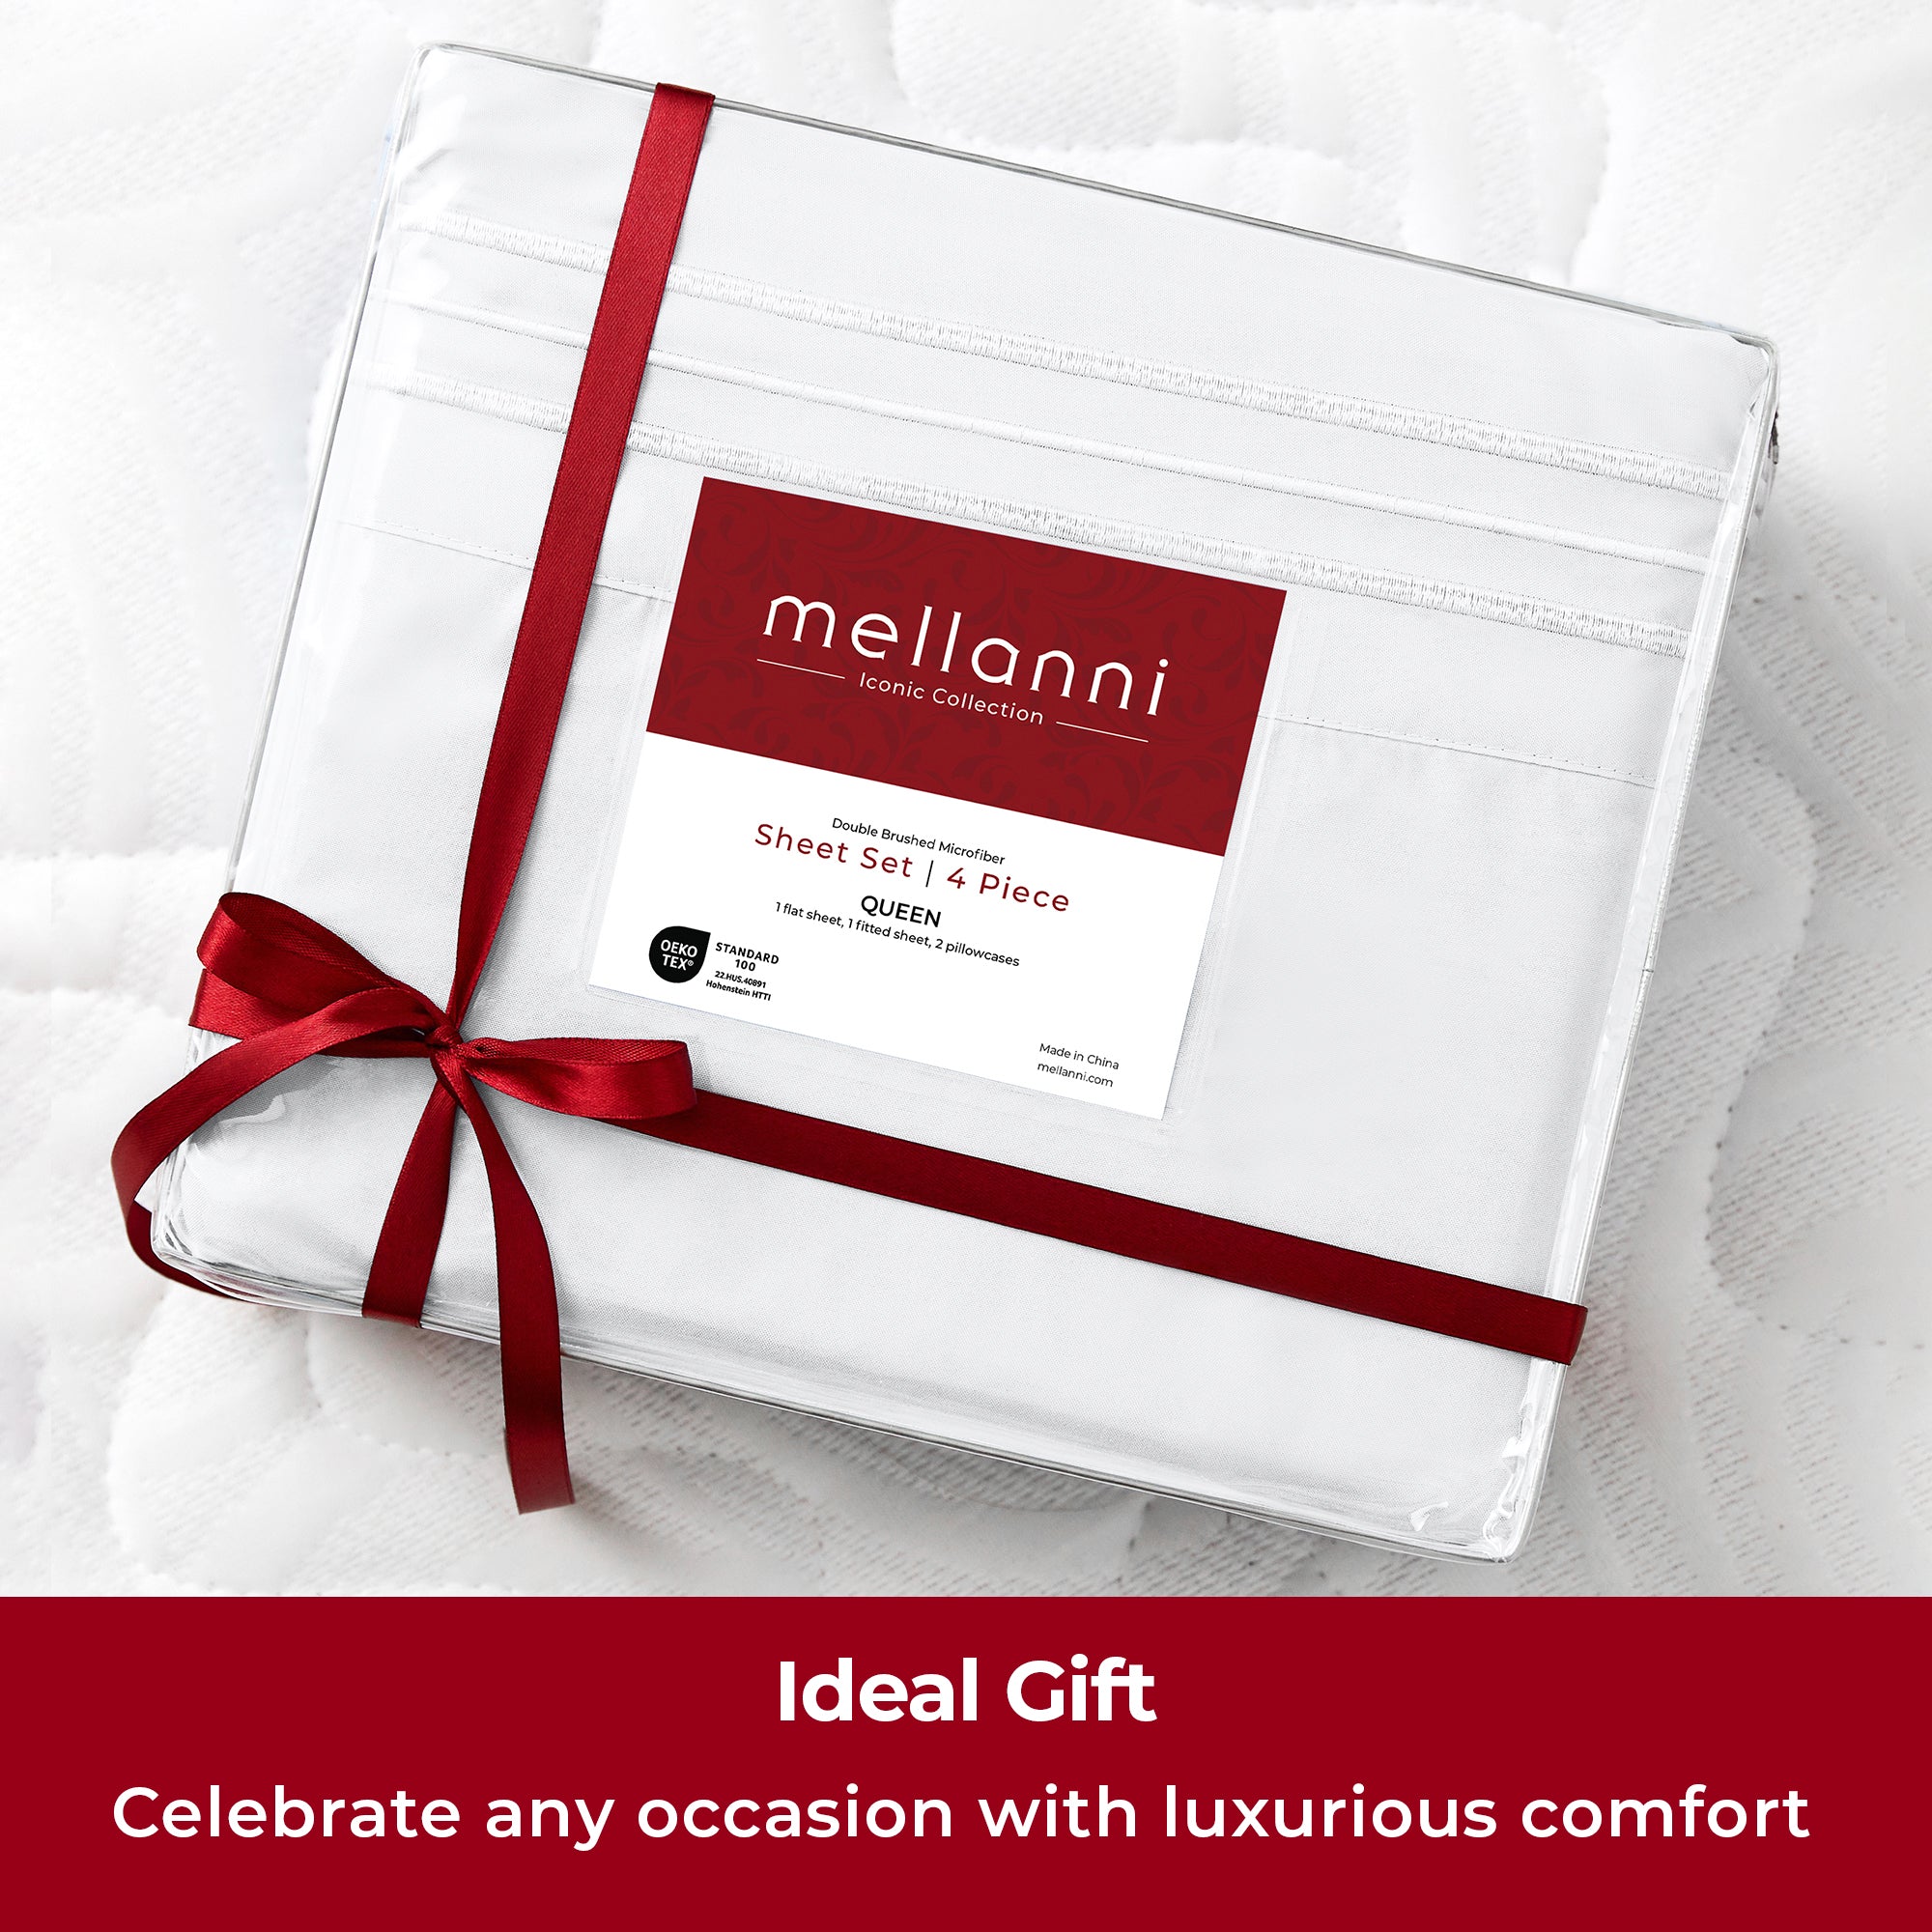 Mellanni Sheet Set Iconic Hotel Luxury Brushed Microfiber, Deep Pocket Sheet, 4 Piece Queen White - image 5 of 7